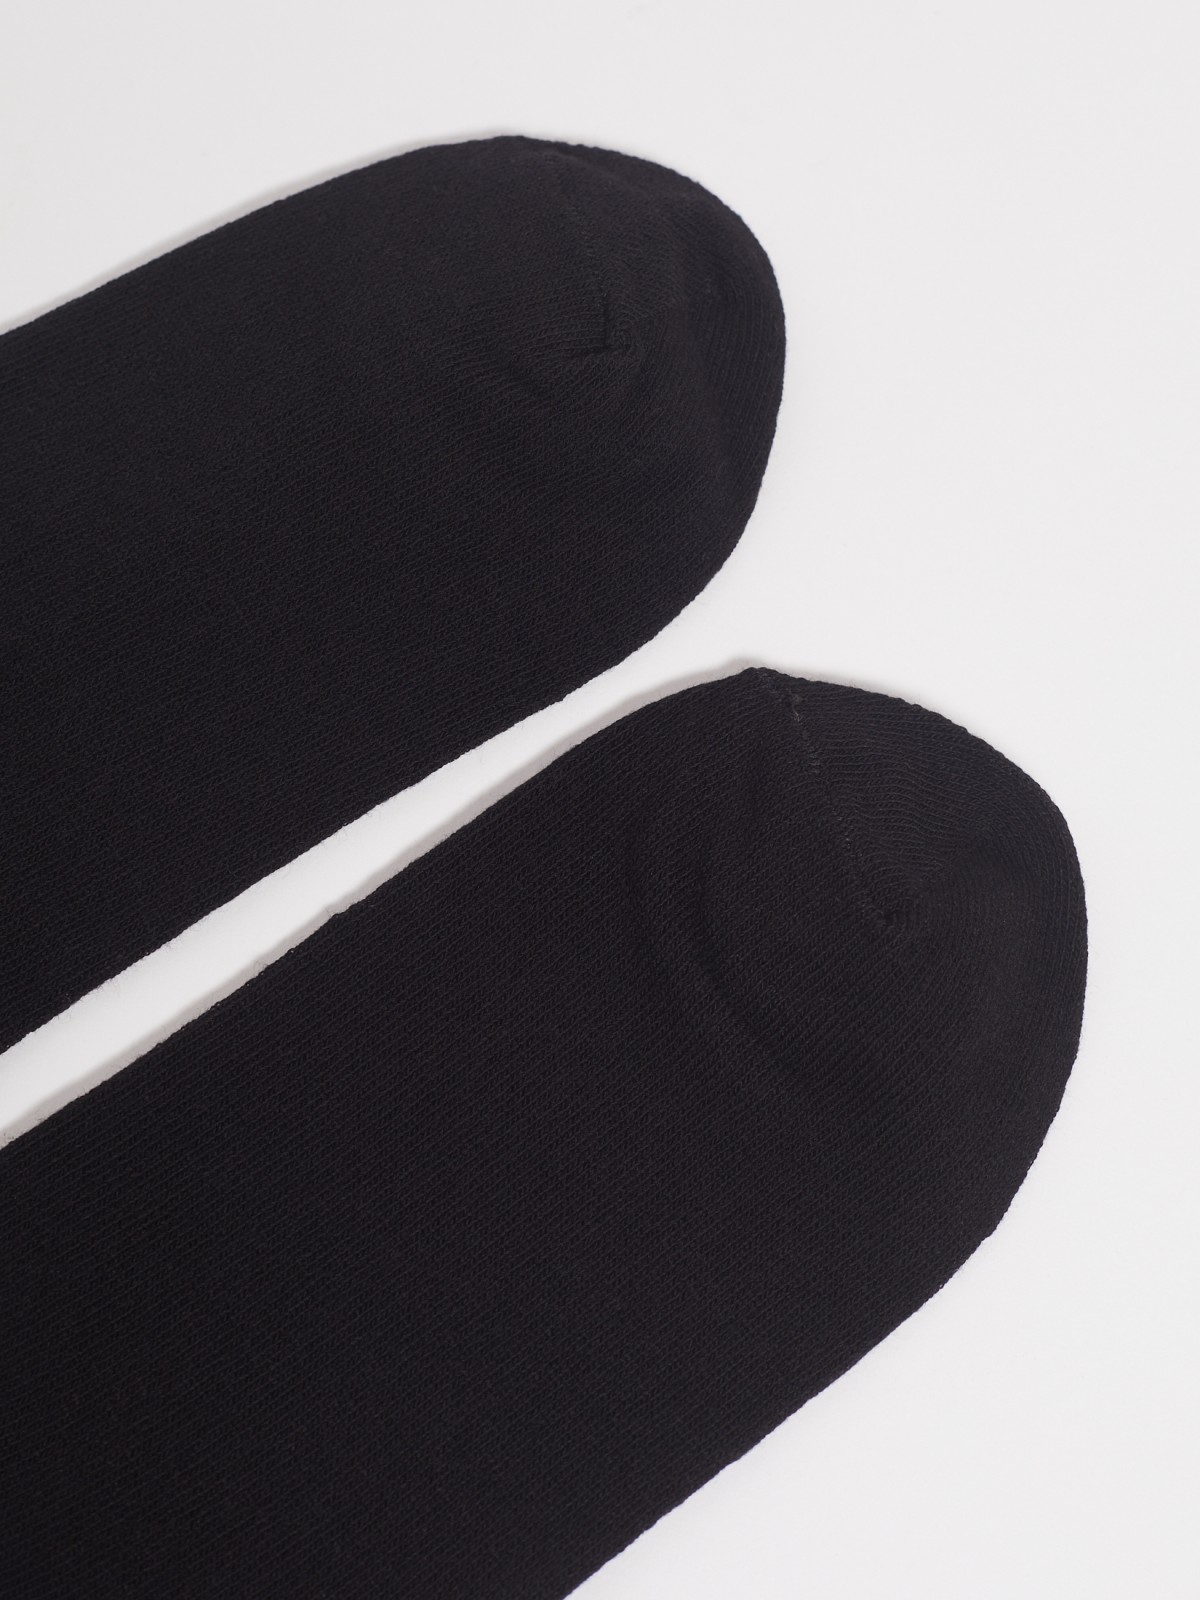 Набор коротких носков (5 пар в комплекте)